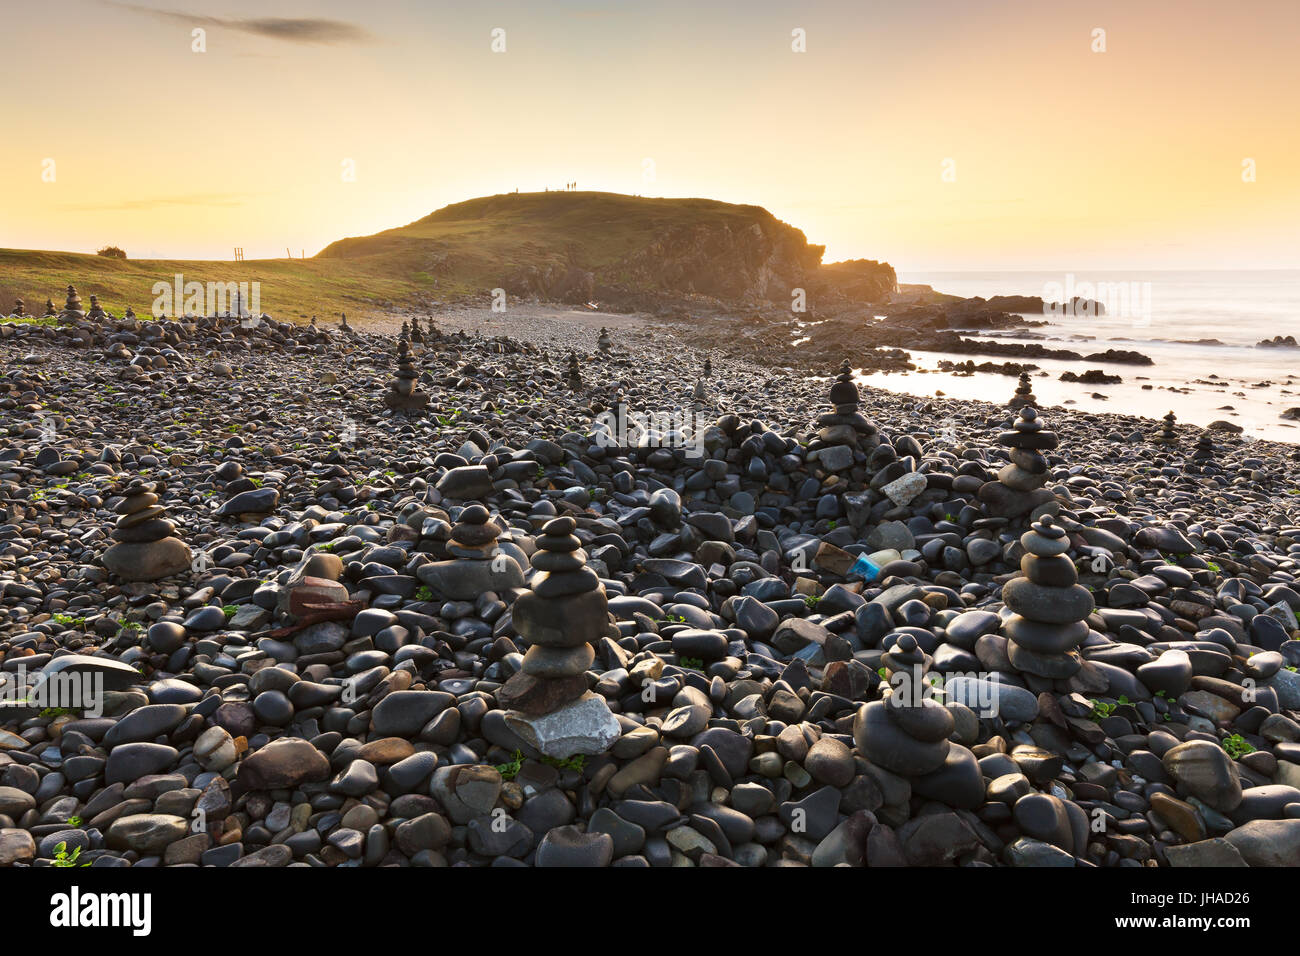 The golden morning light illuminates a beach of pebbles and rock cairns near Port Macquarie, Australia. Stock Photo